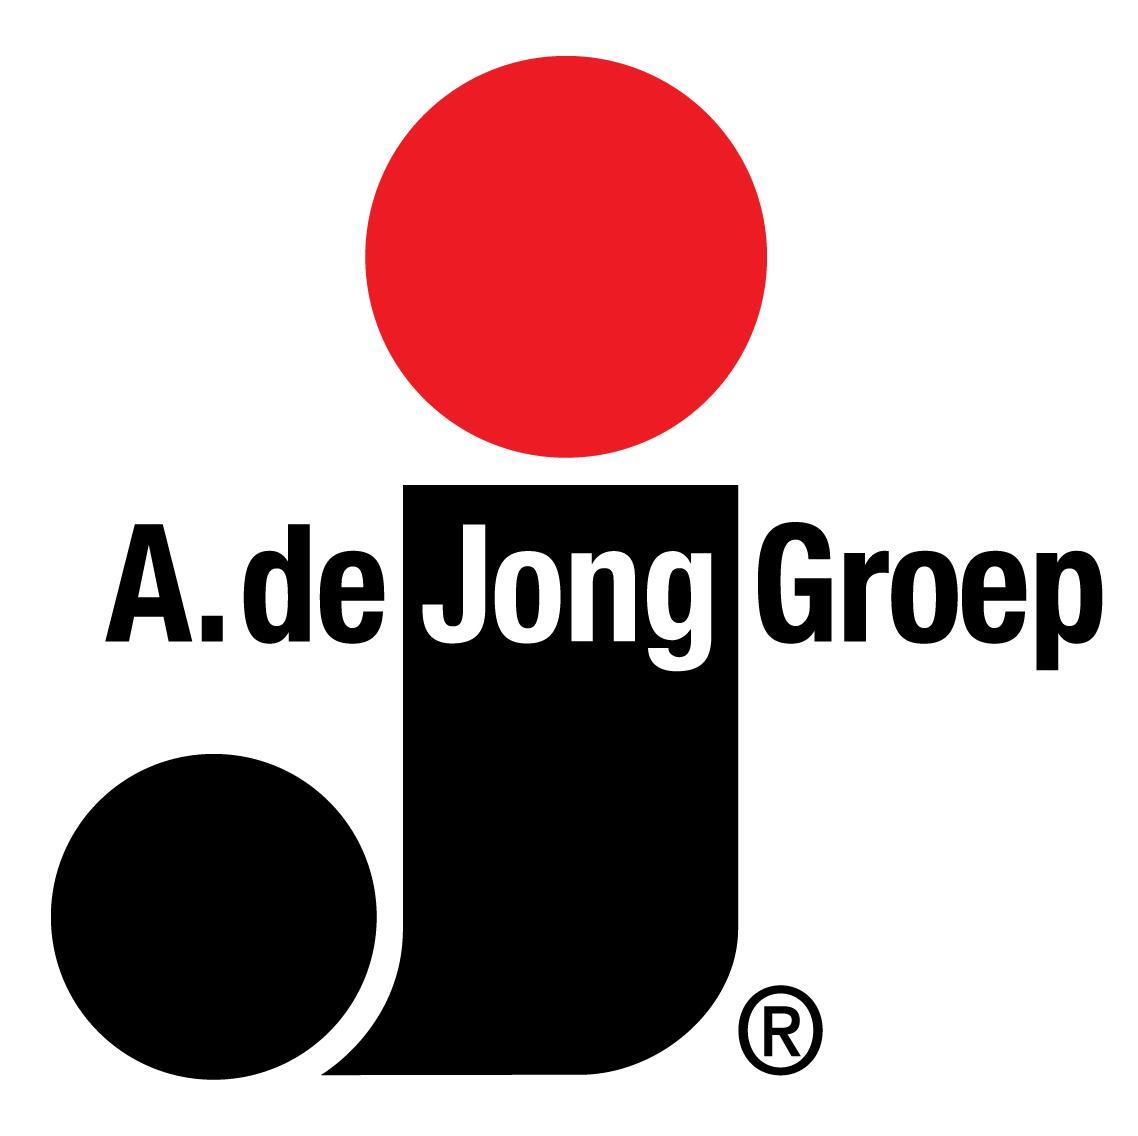 Officieel Twitter account van A. de Jong Groep | Facebook: https://t.co/R3278BKBqO | LinkedIn: https://t.co/V9aIWkHono